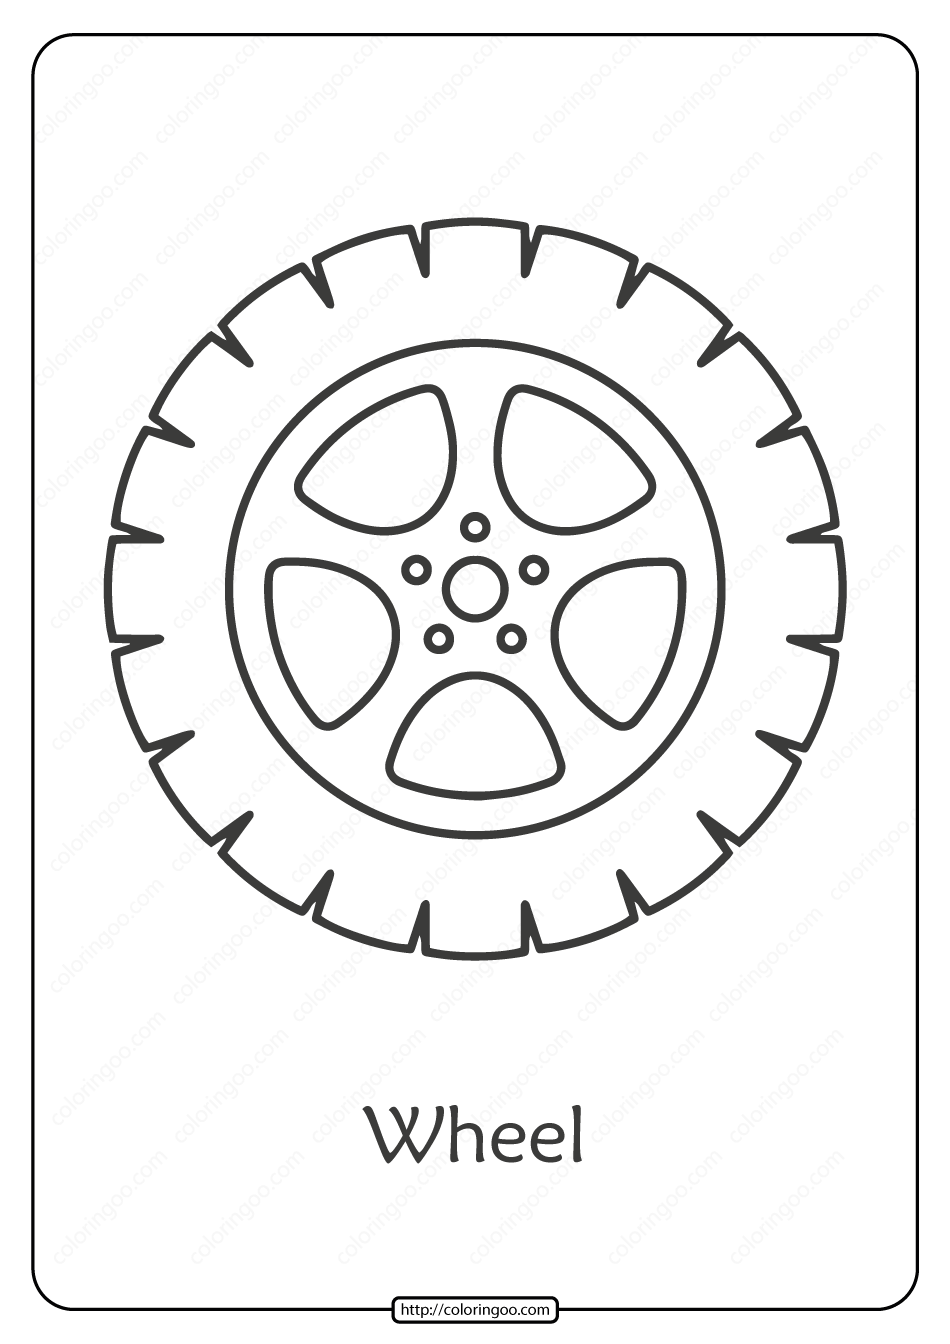 Free printable car wheel pdf coloring page coloring pages car wheel templates printable free